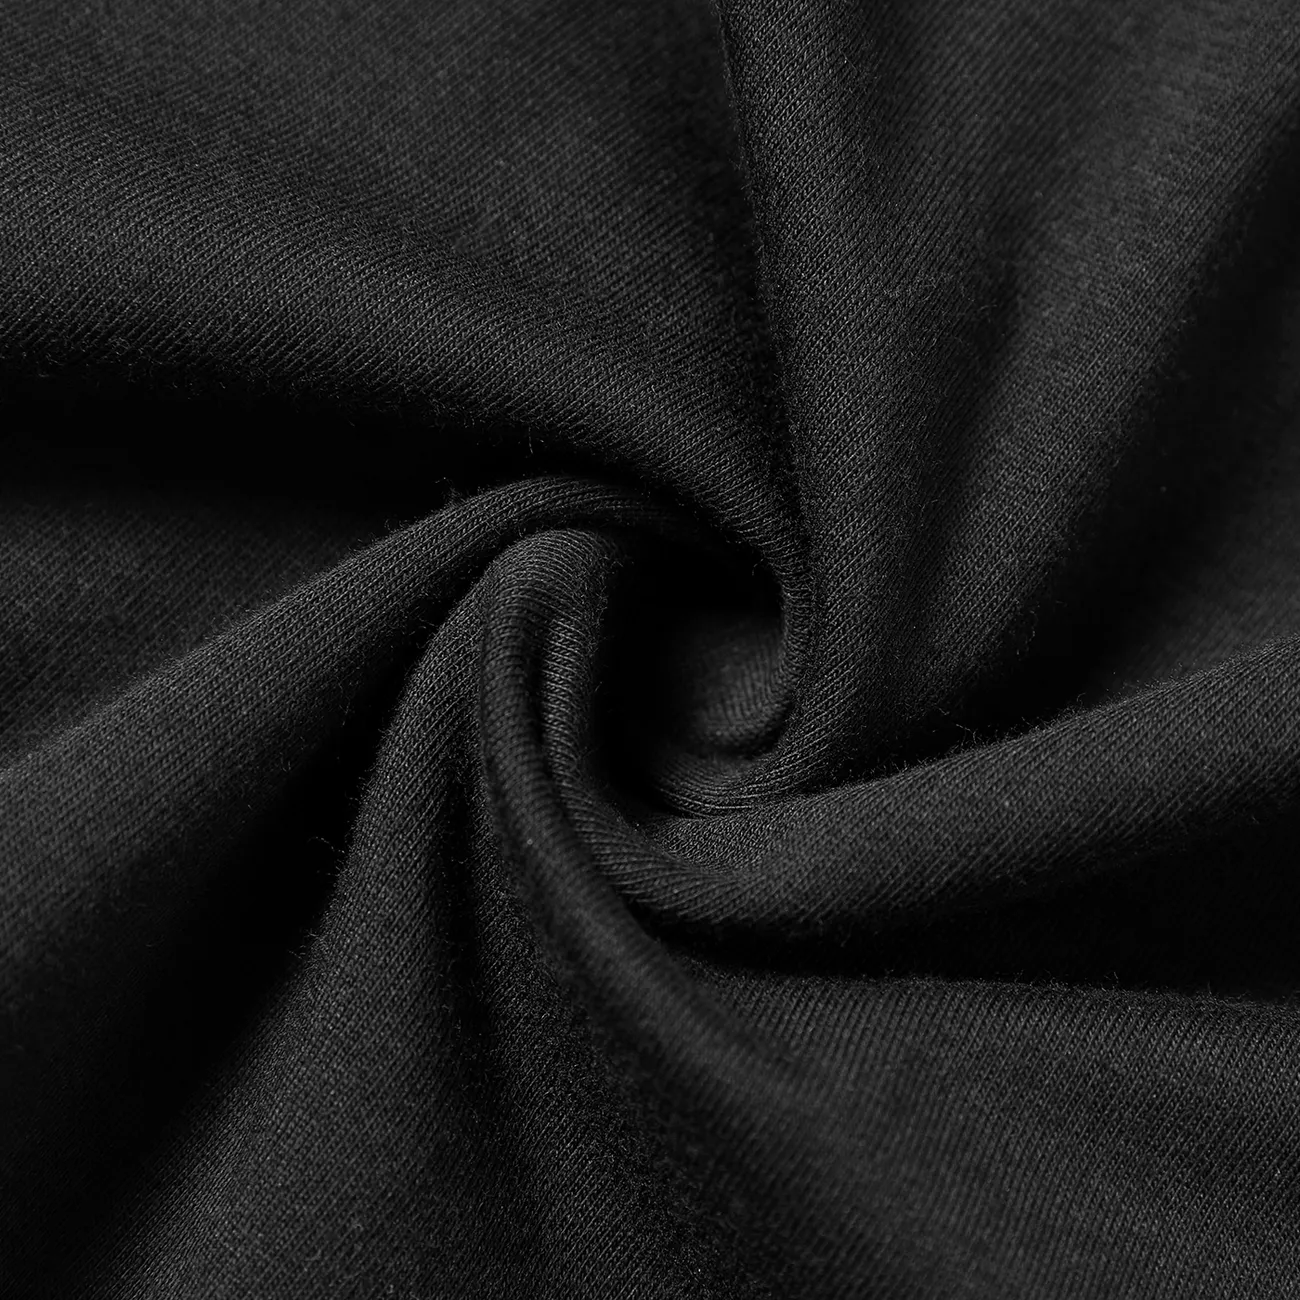 Toddler Girl Solid Color Cotton Sleeveless Jumpsuit Black big image 1